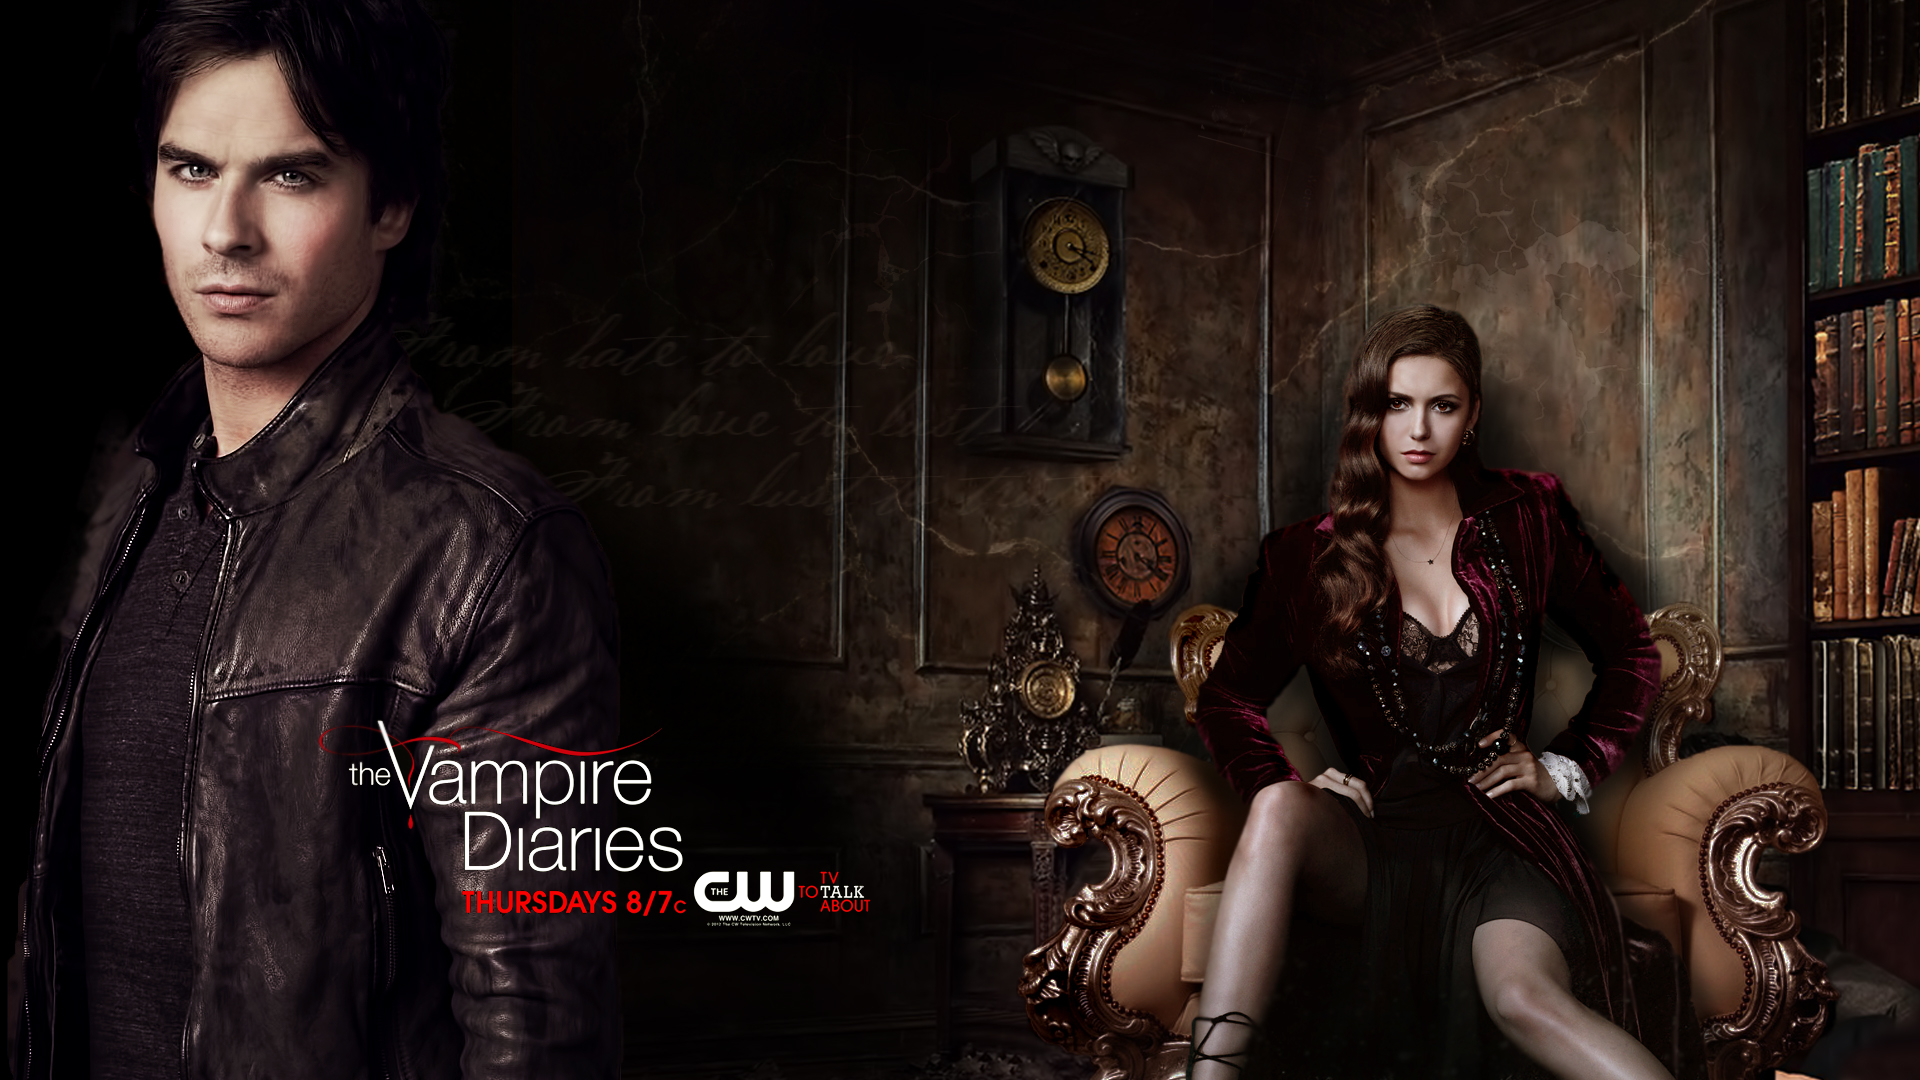 Delena/tvd 4 Season - Vampire Diaries Wallpapers Hd For Pc - HD Wallpaper 